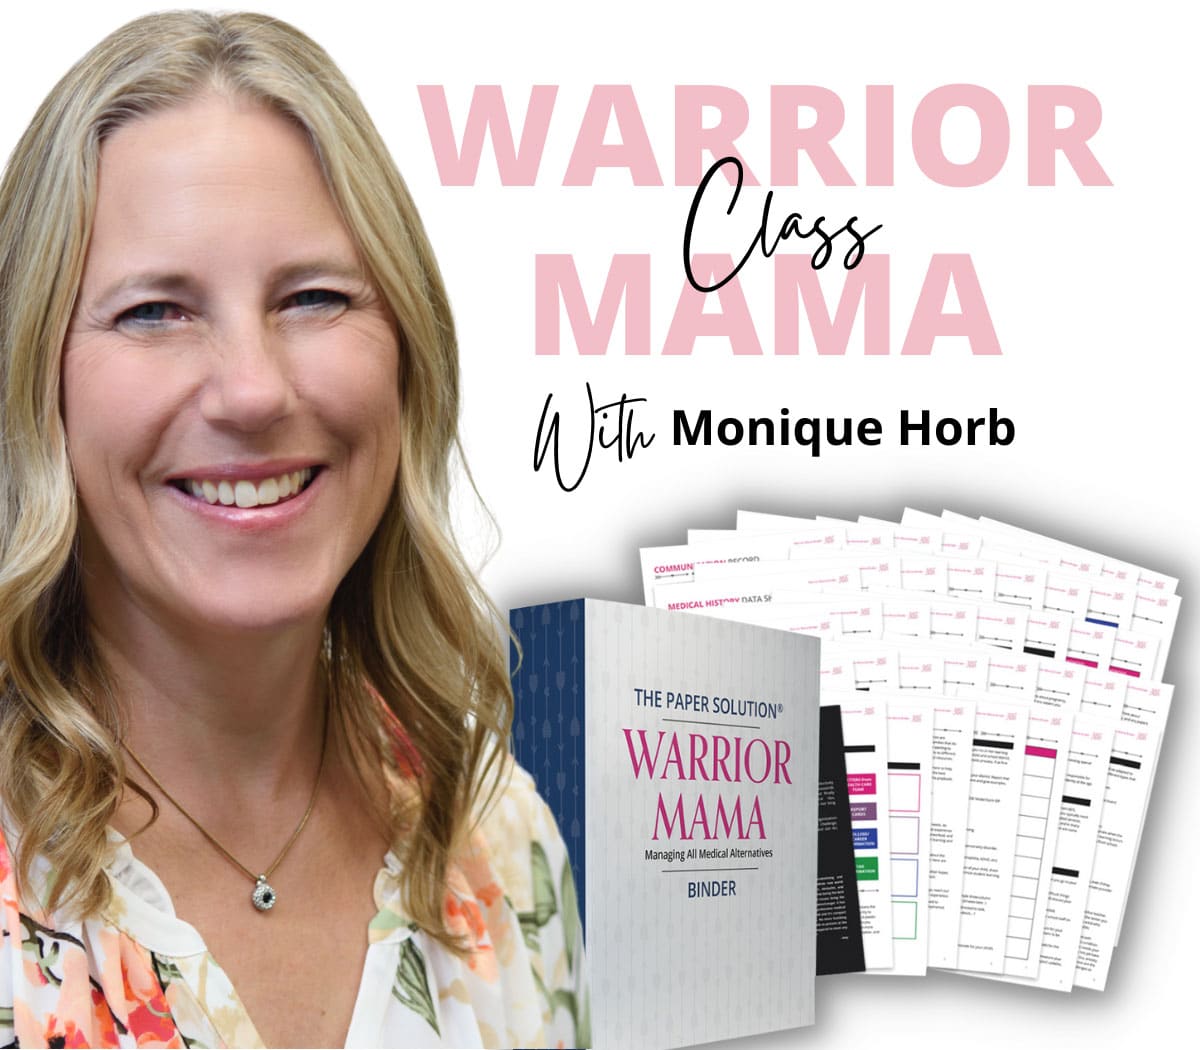 Warrior Mama Class with Monique Horb